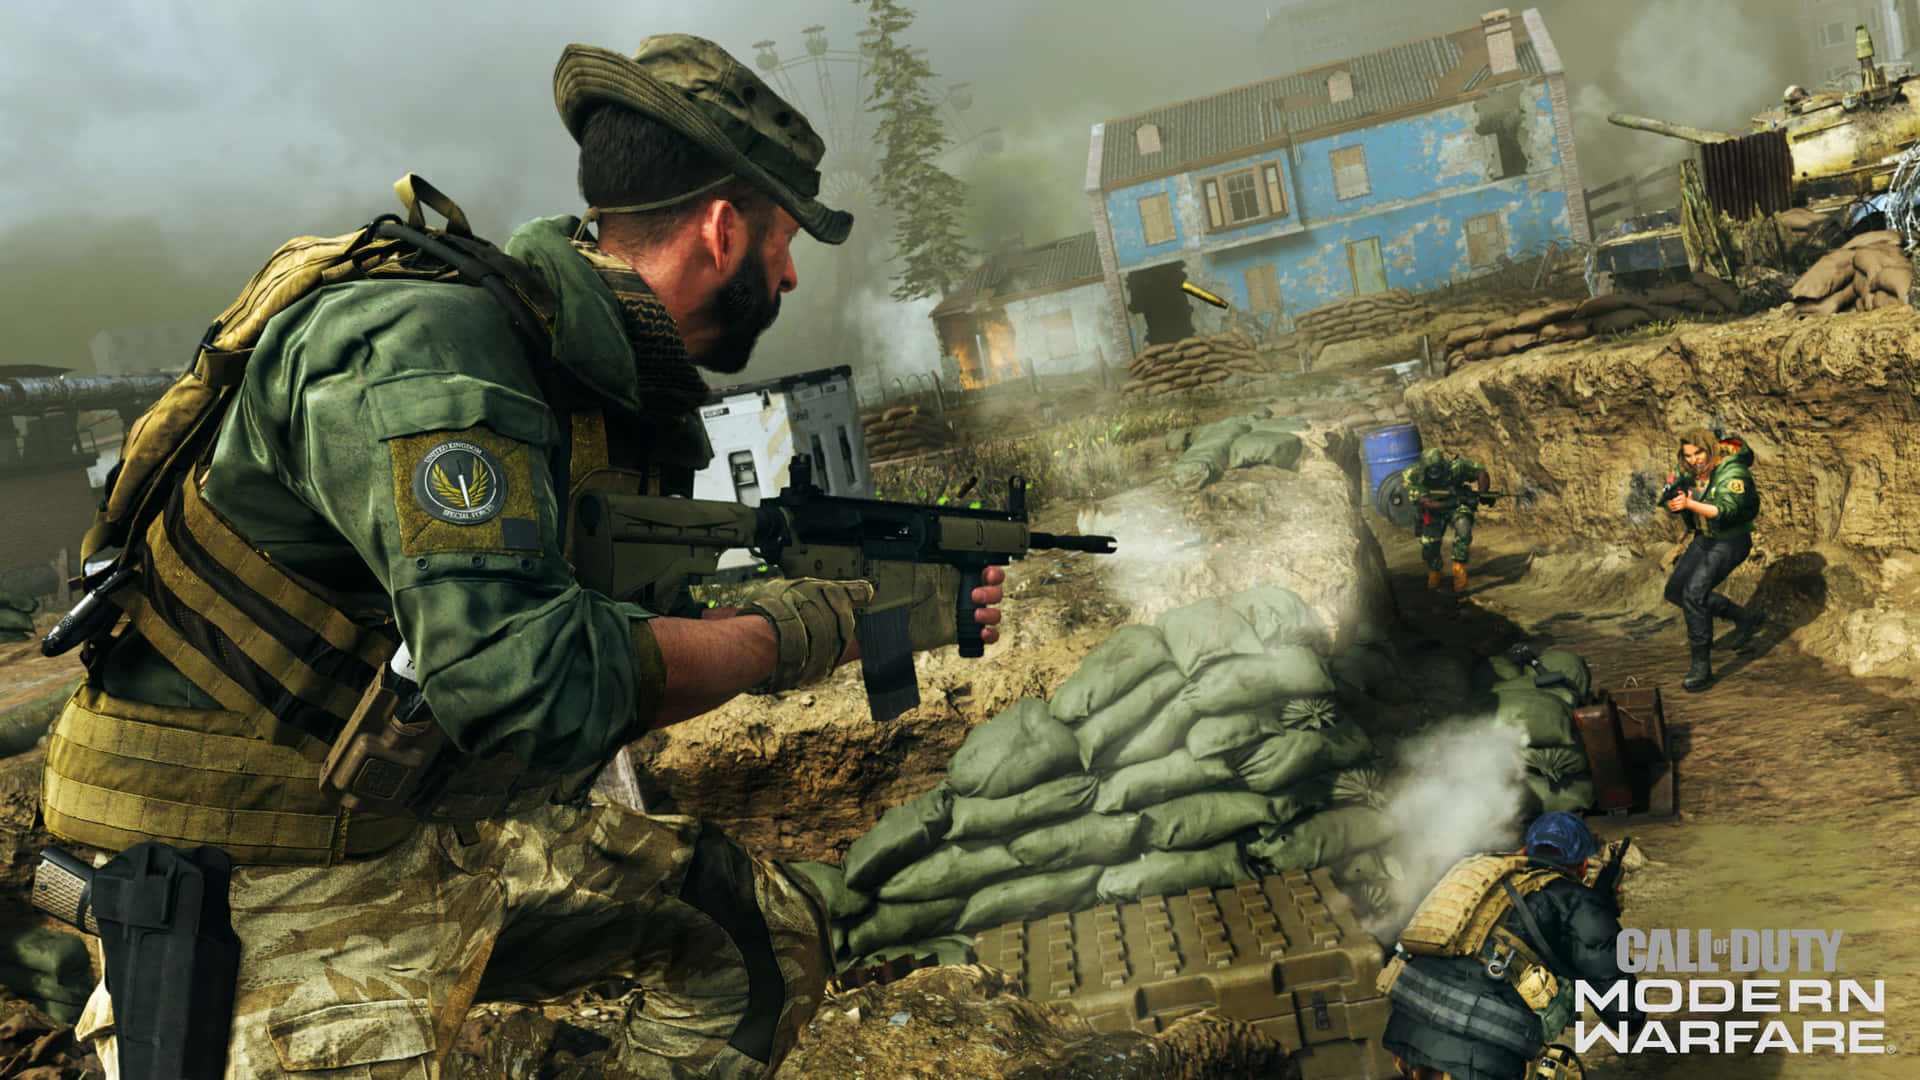 "Ready for Battle: Play Call of Duty Modern Warfare"